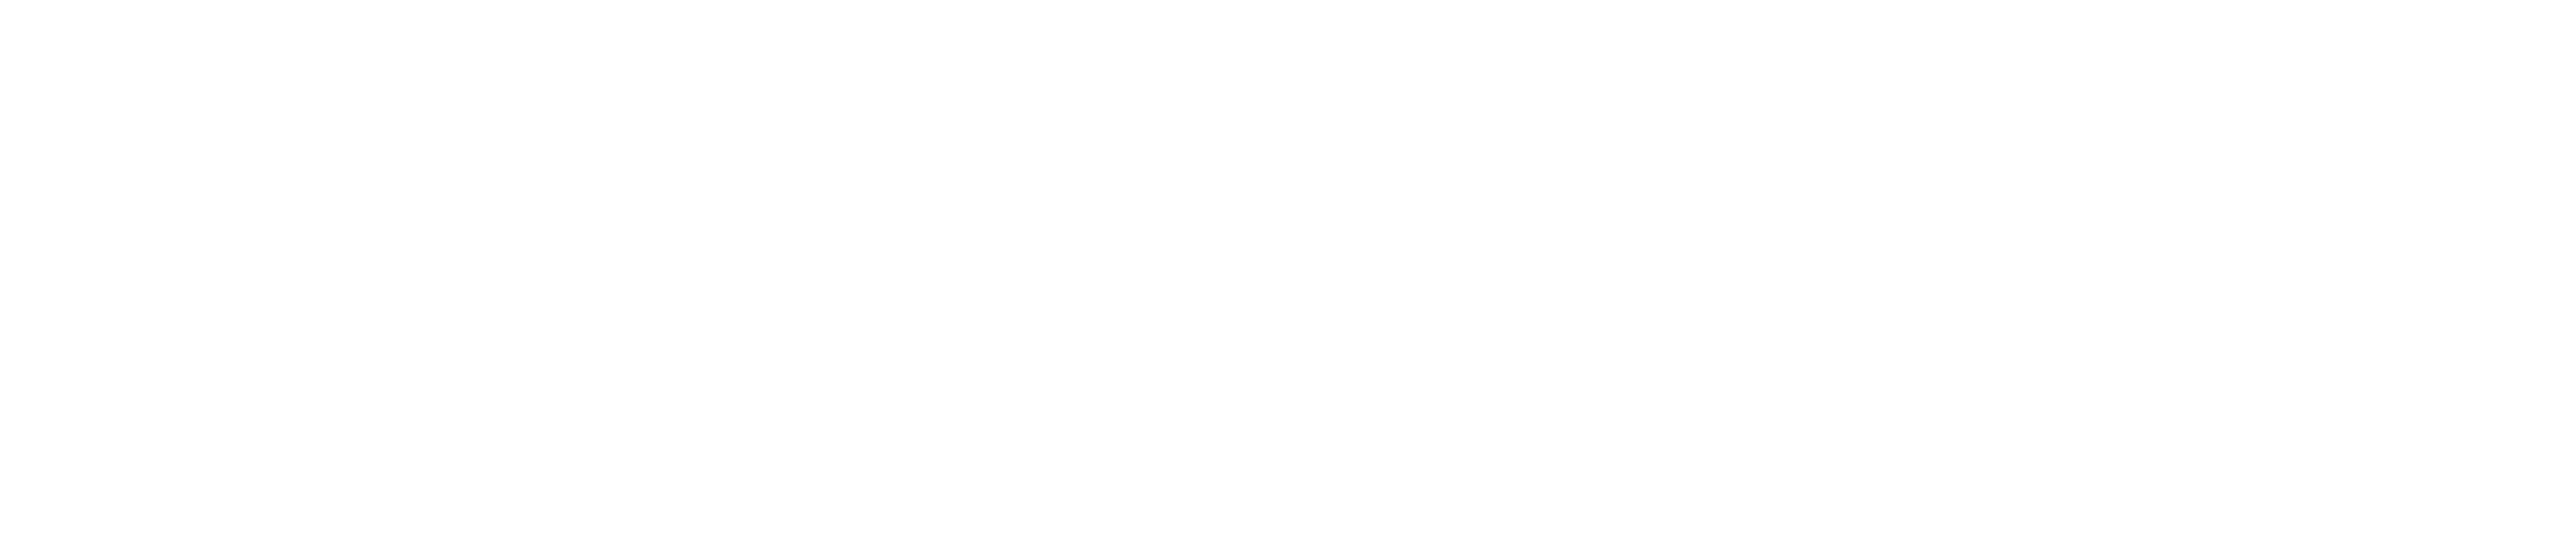 buildingradar-logo-STANDARD-white-rgb